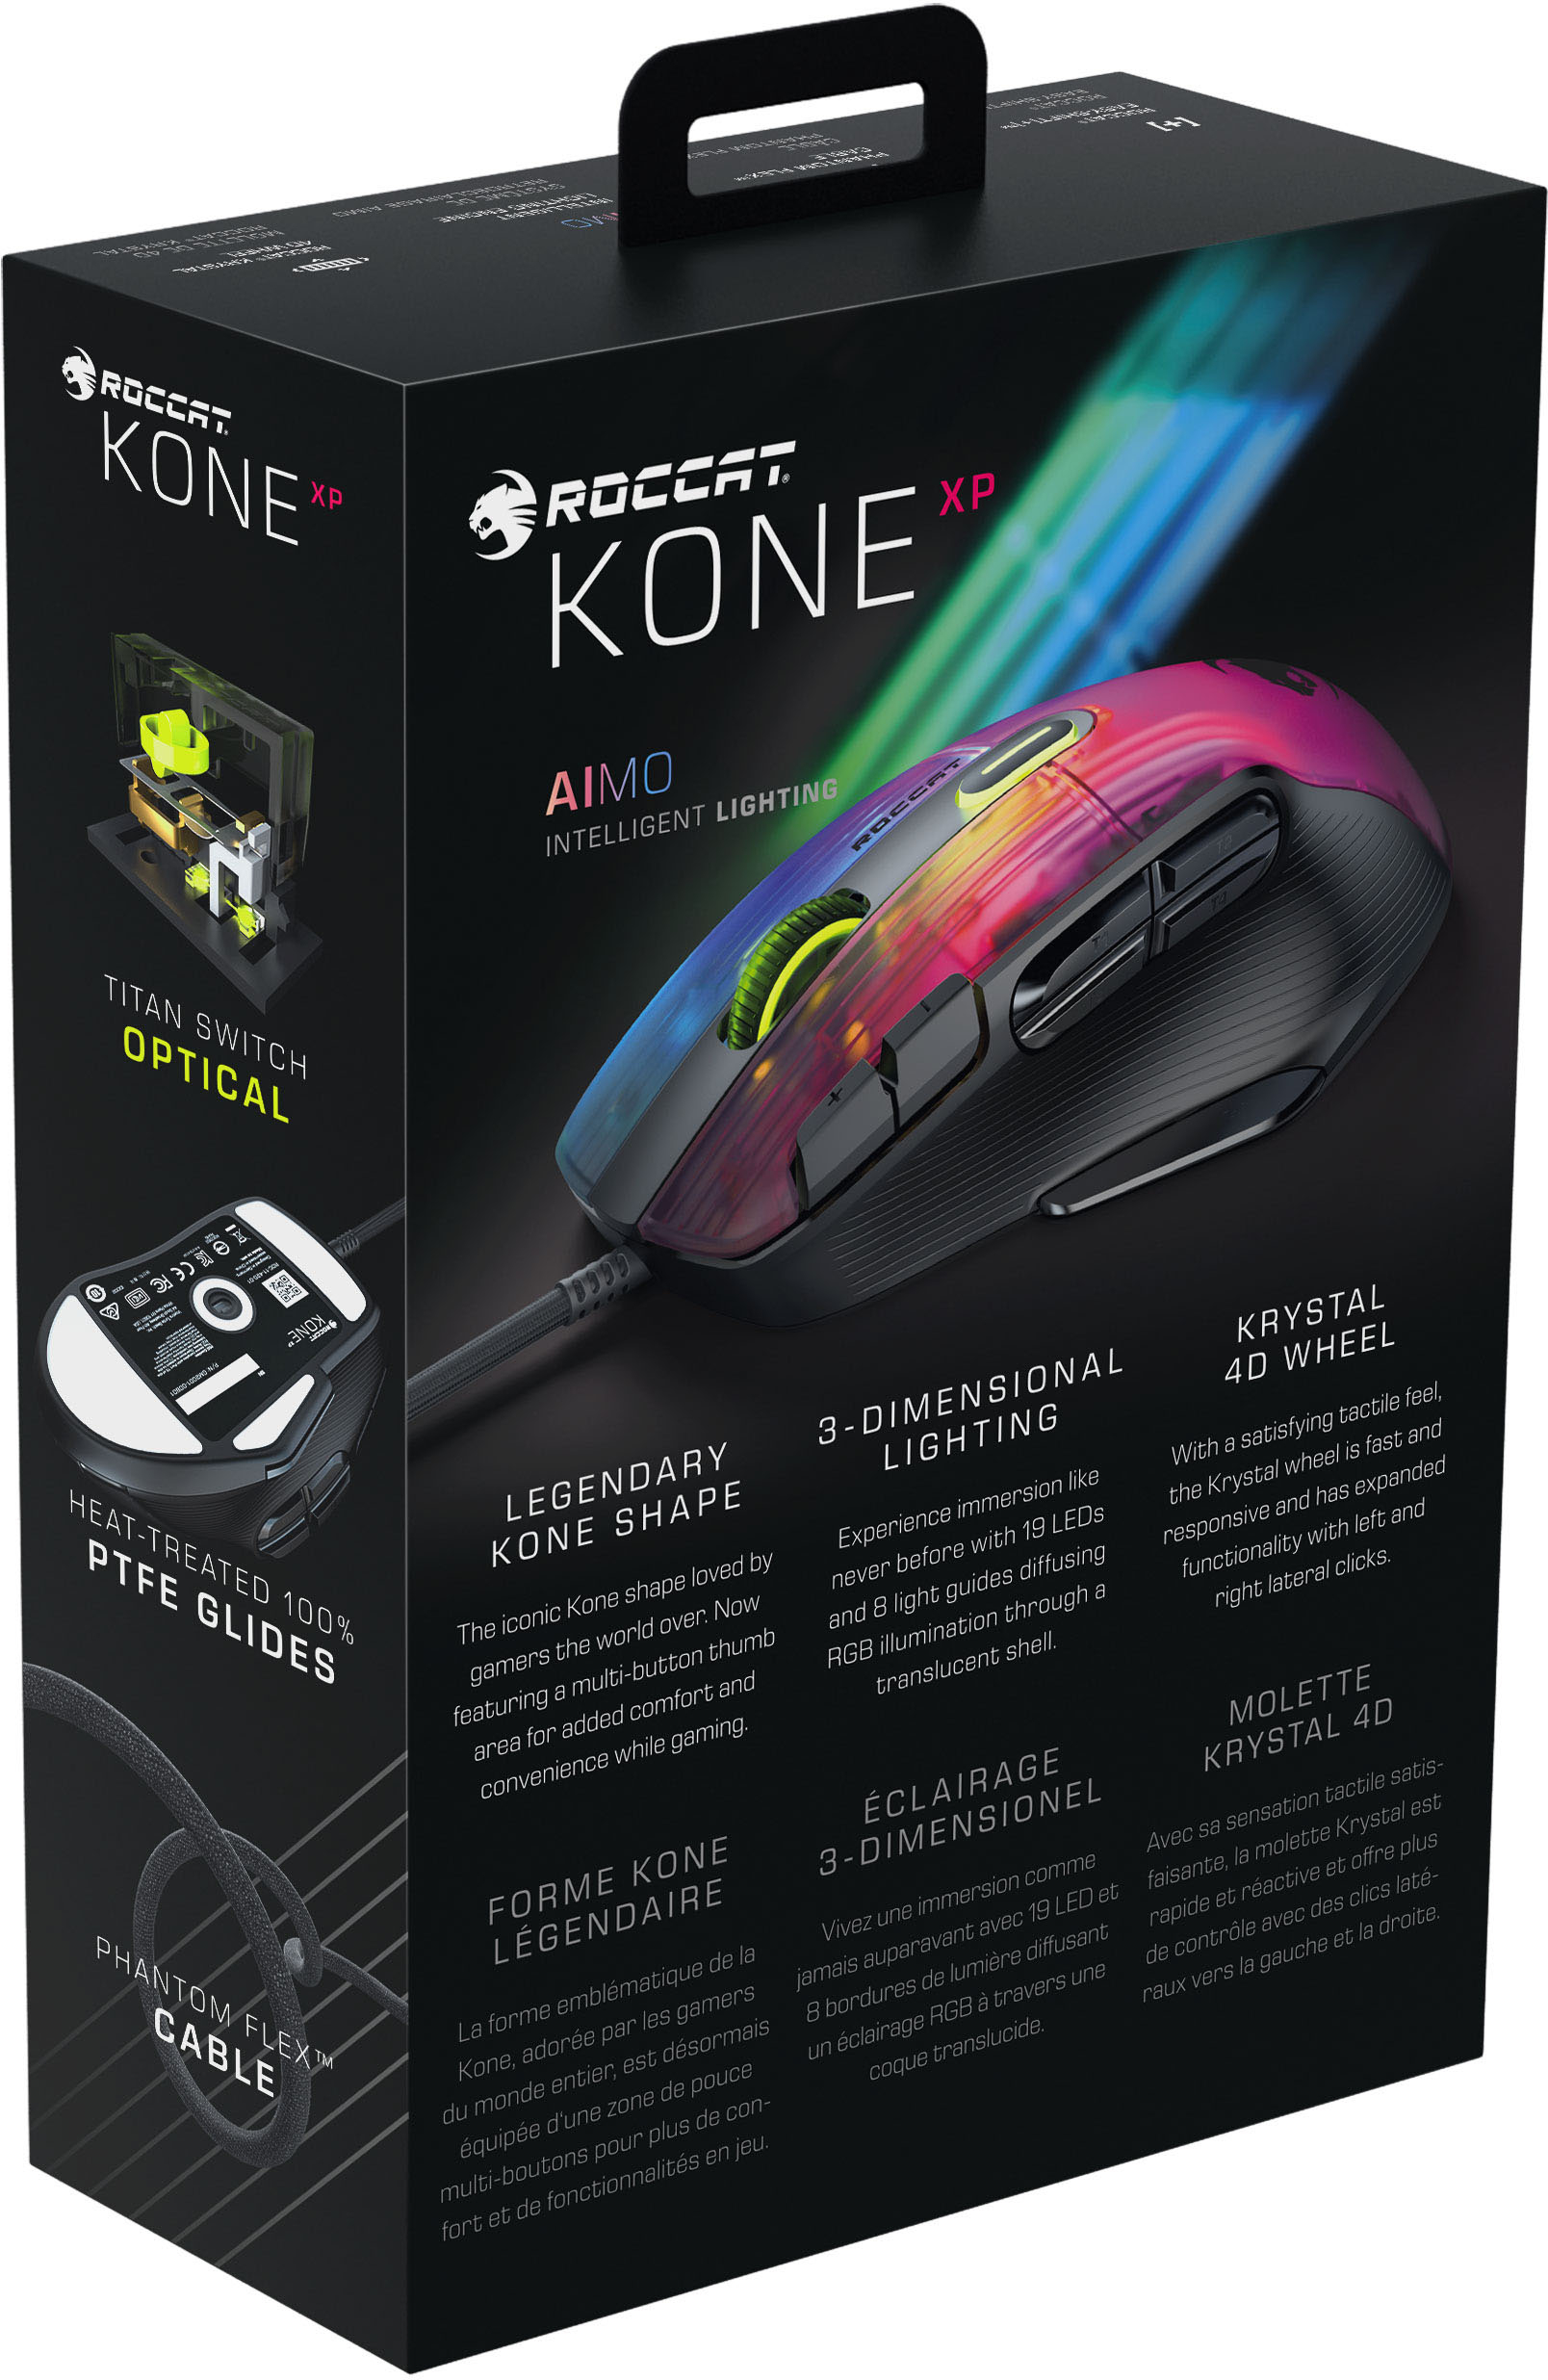 Roccat lance sa souris Kone XP à 15 boutons programmables